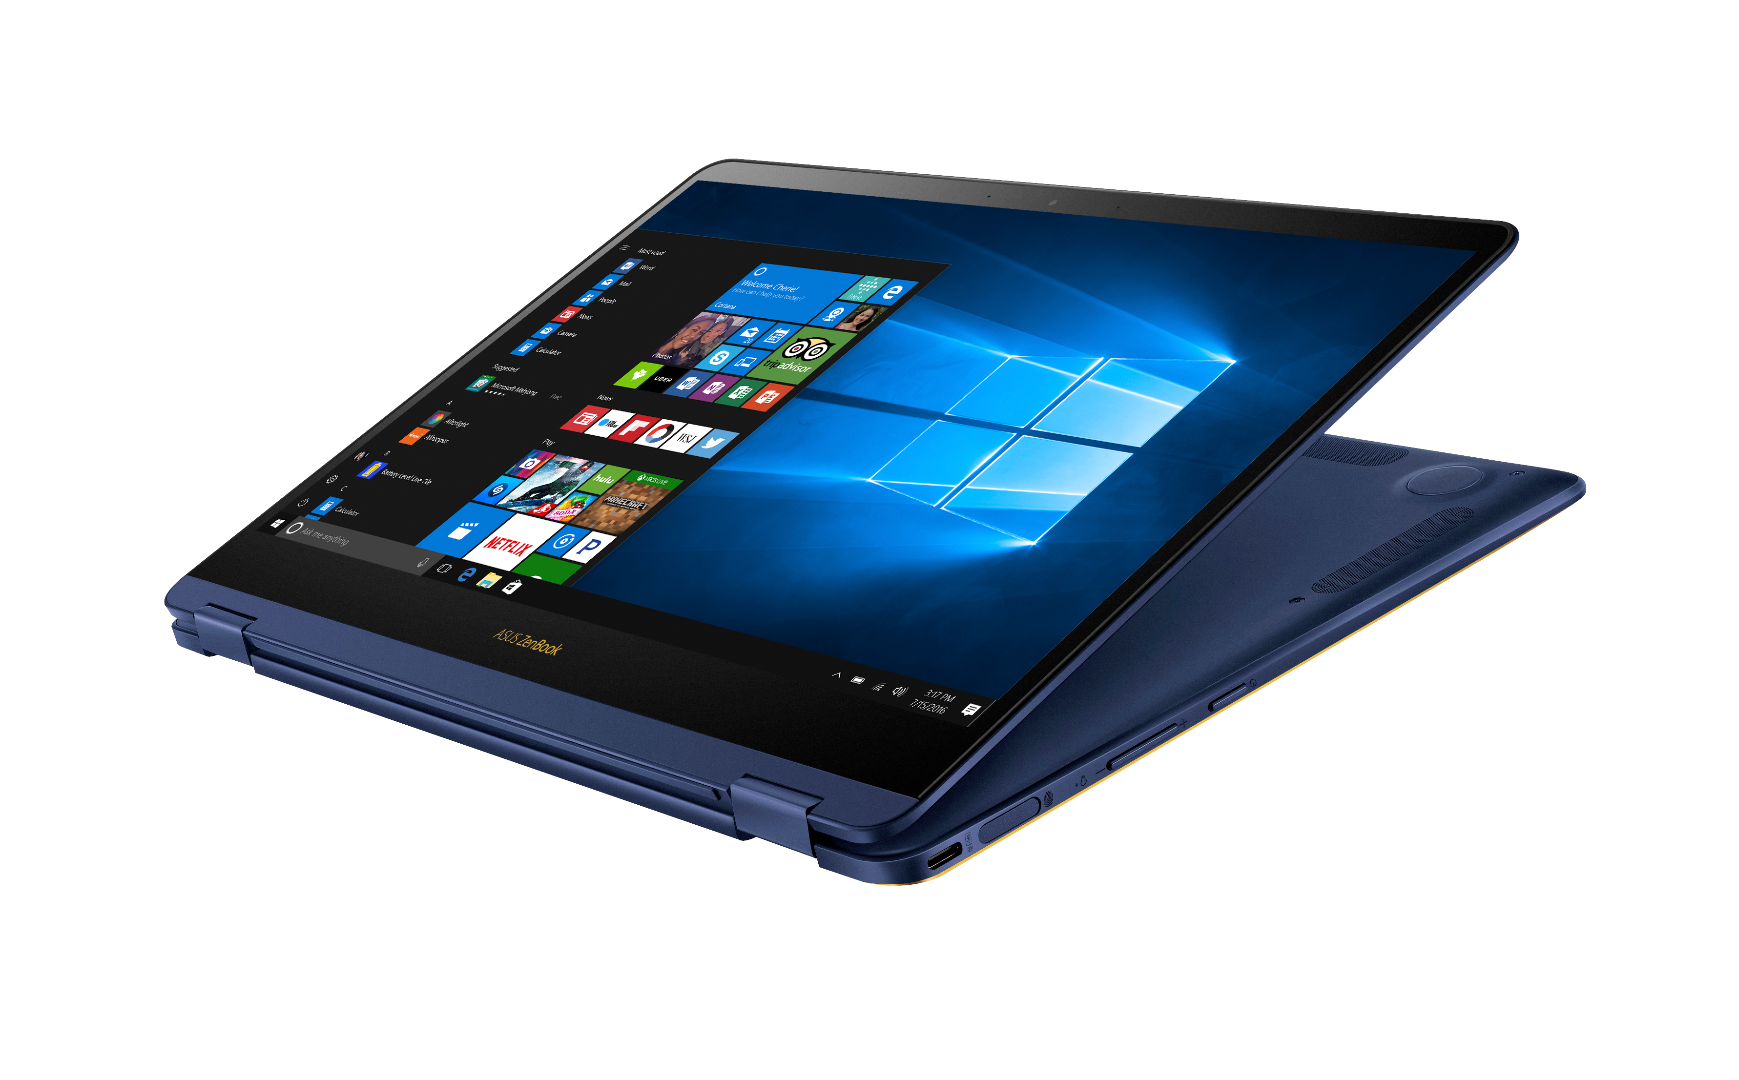 Asus’ ZenBook Flip laptops updated with Intel’s latest quad-core